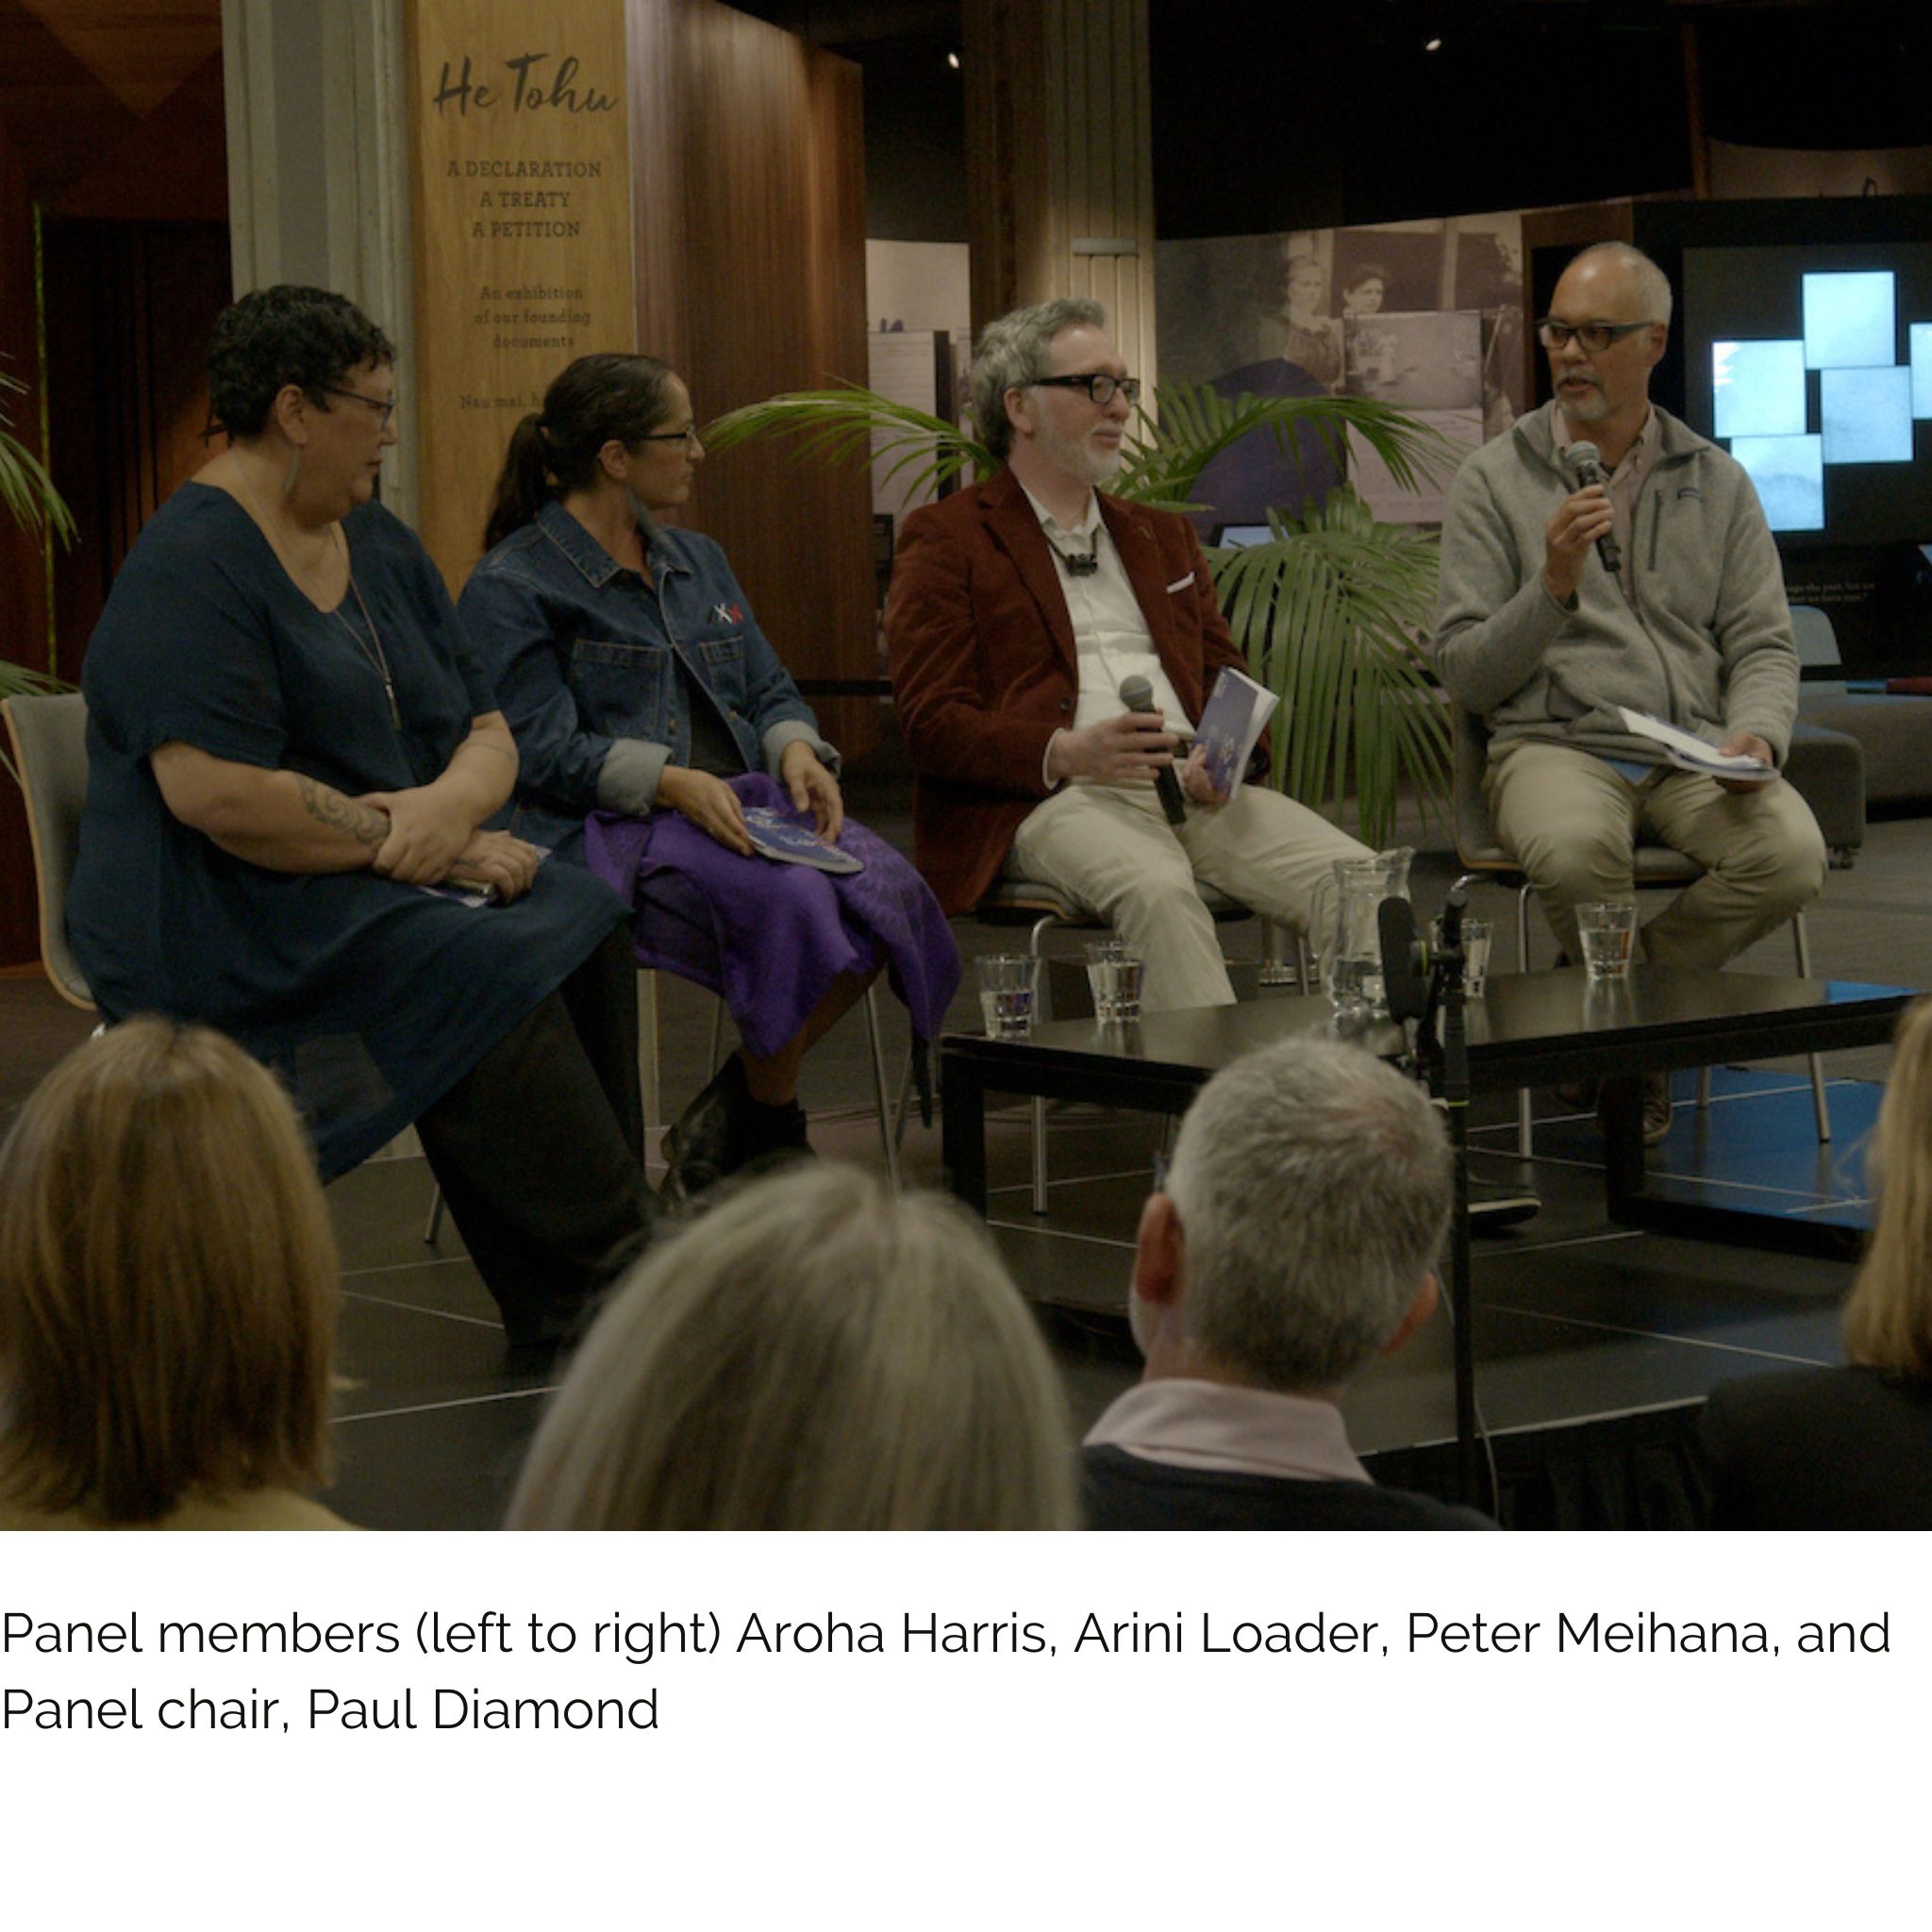 Panellists, Aroha Harris, Arini Loader and Peter Meihana with panel chair, Paul Diamond